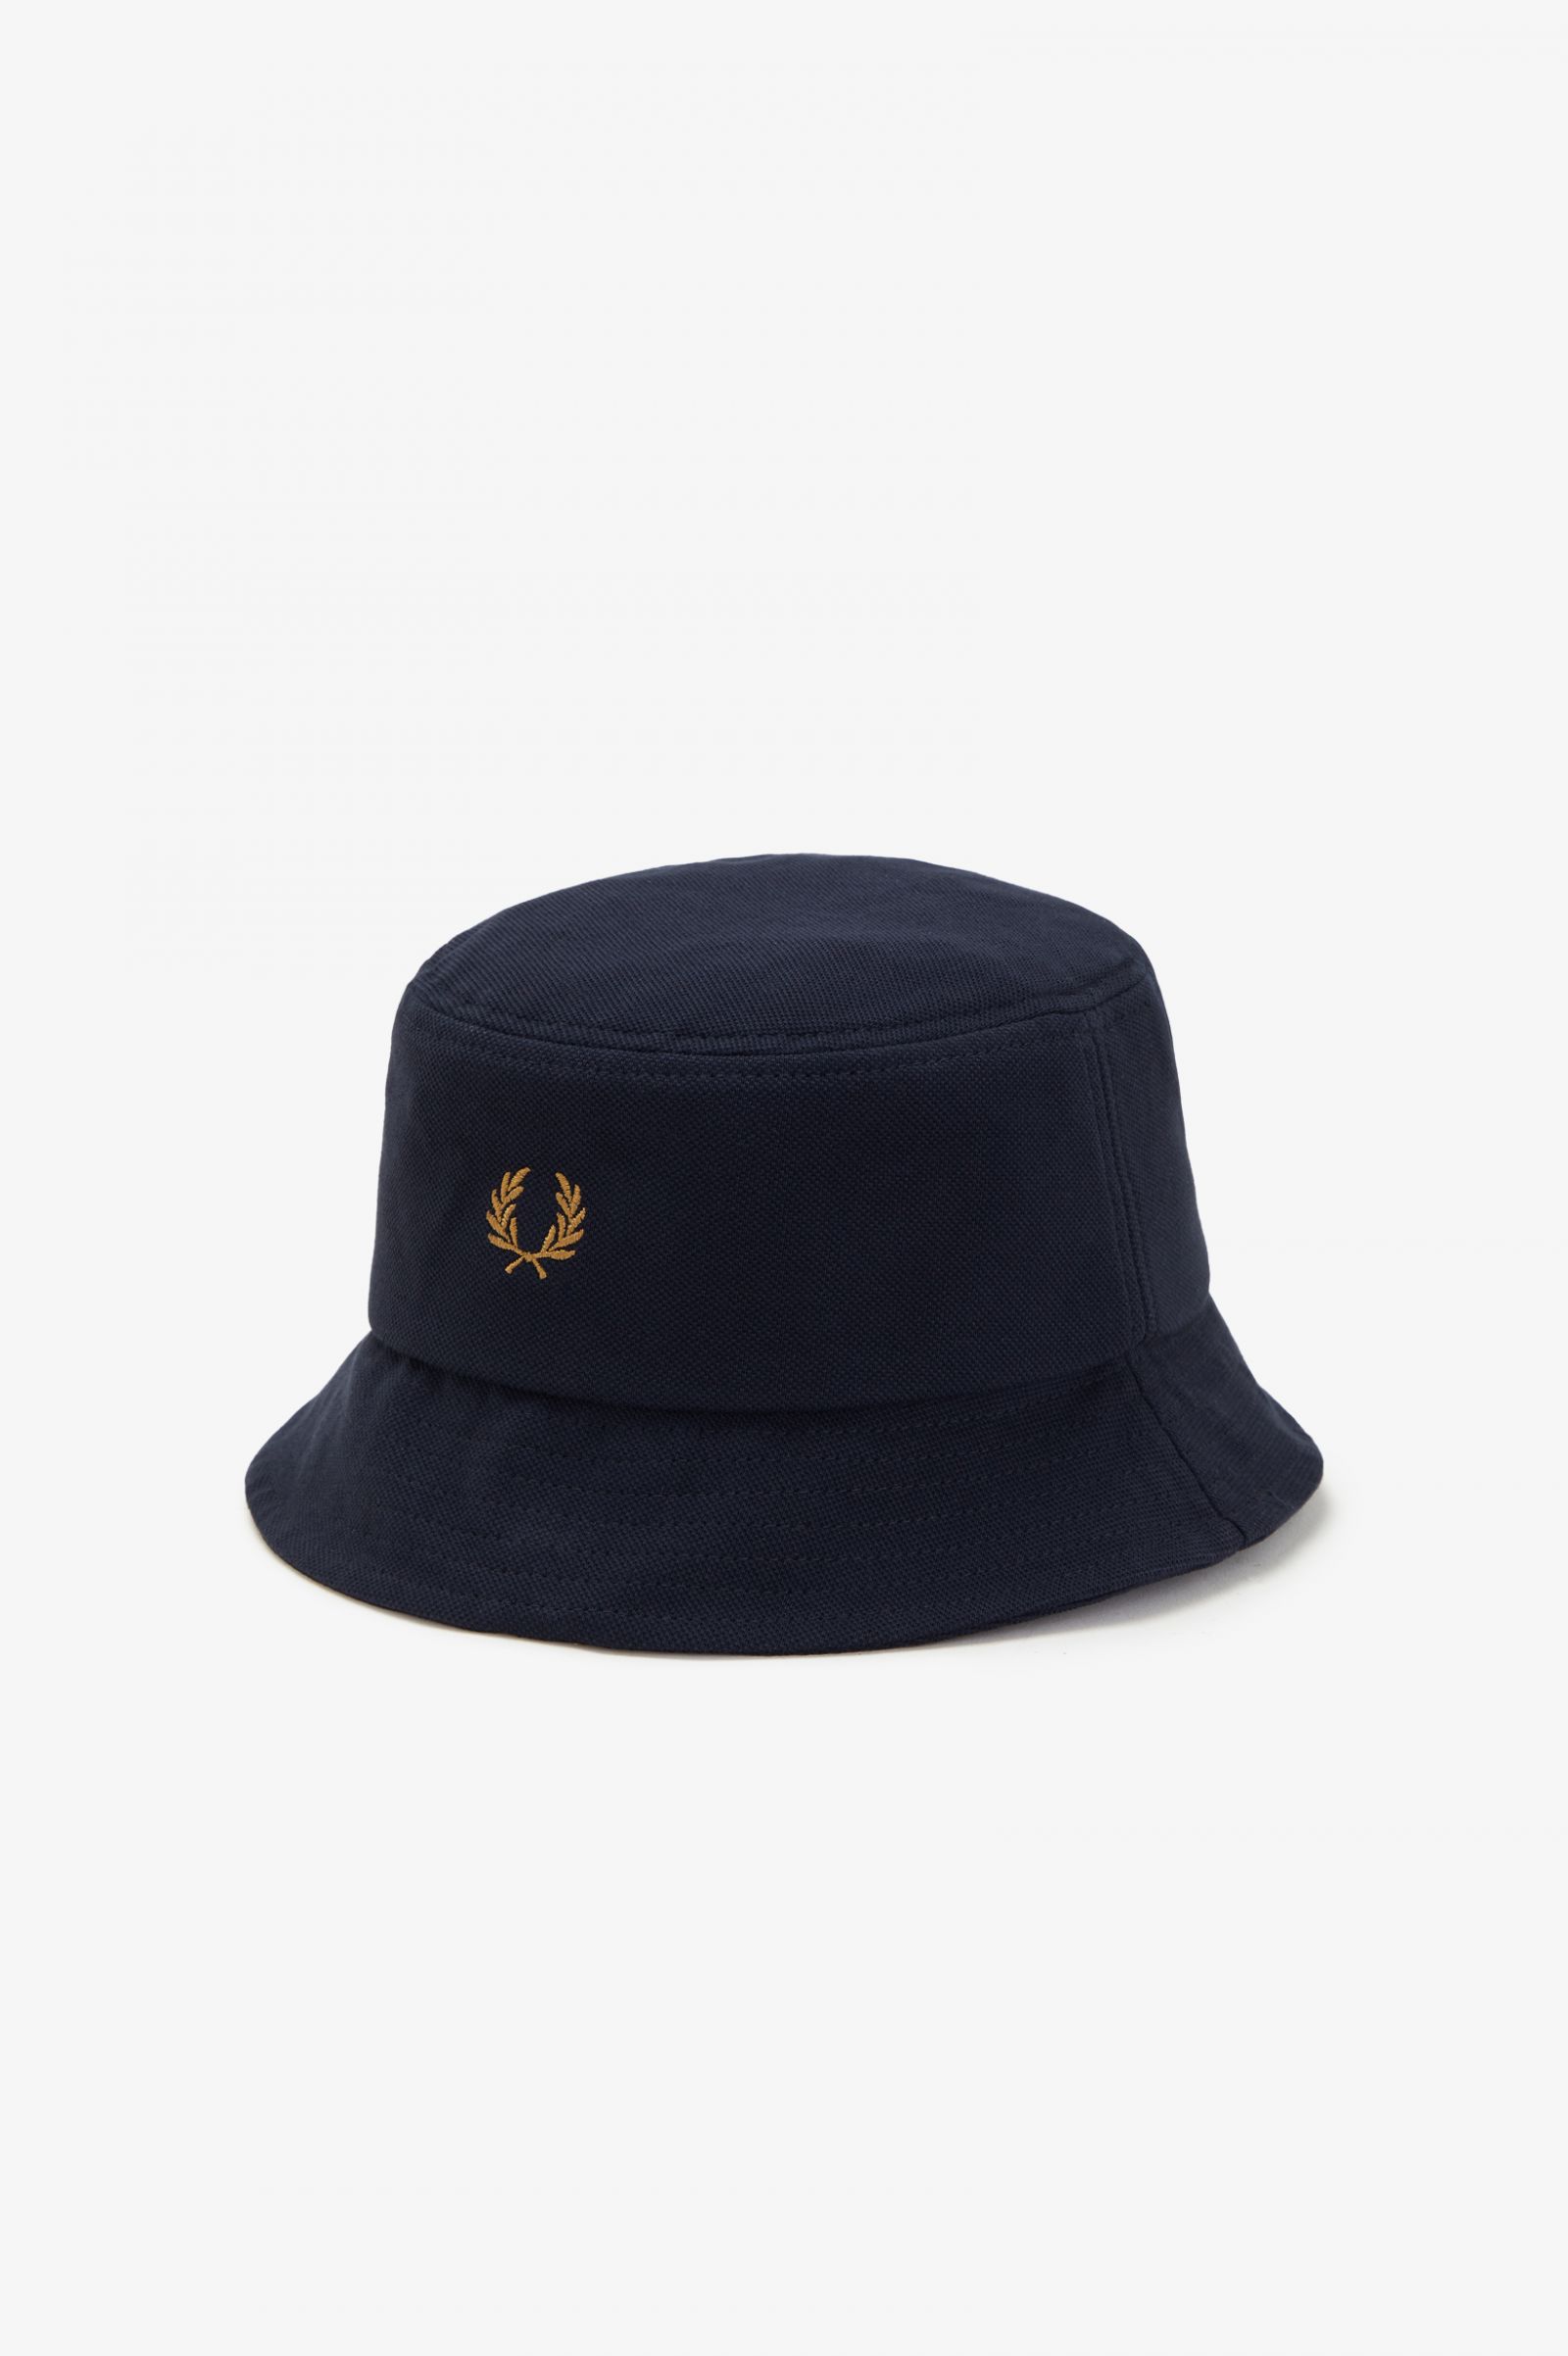 Classic Pique Bucket Hat - Navy / Dark Caramel | Accessories | Hats ...